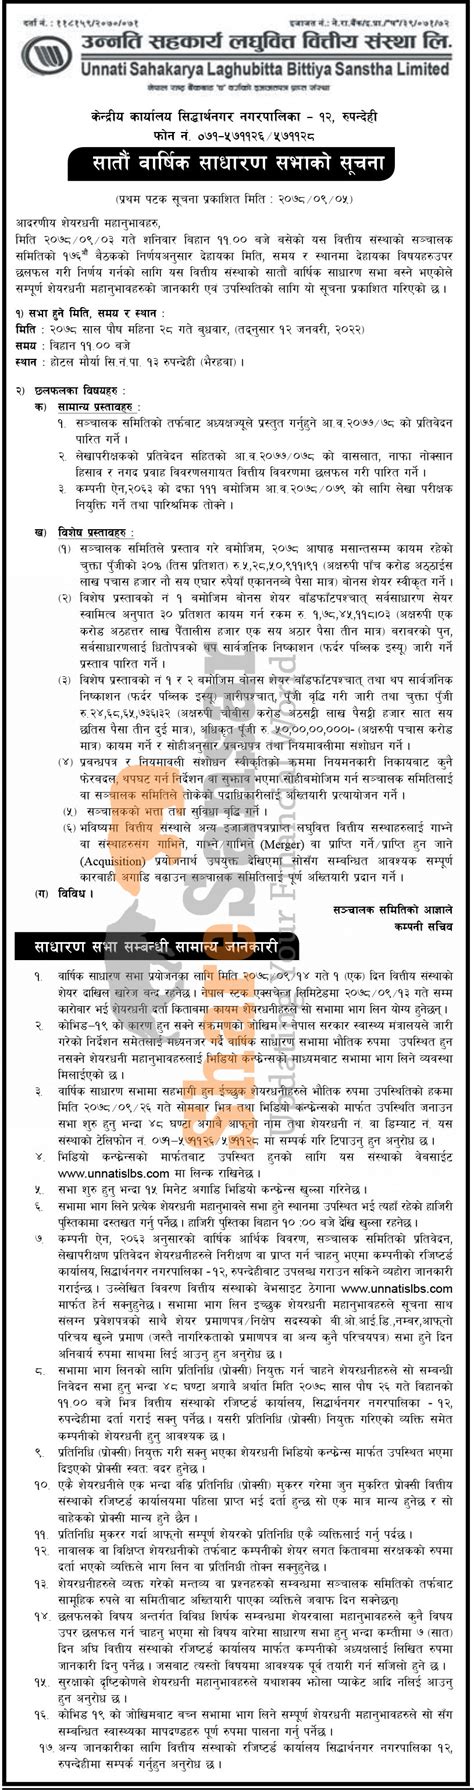 Unnati Sahakarya Laghubitta Bittiya Sanstha Limited Has Announced Its 7th Agm Going To Be Held